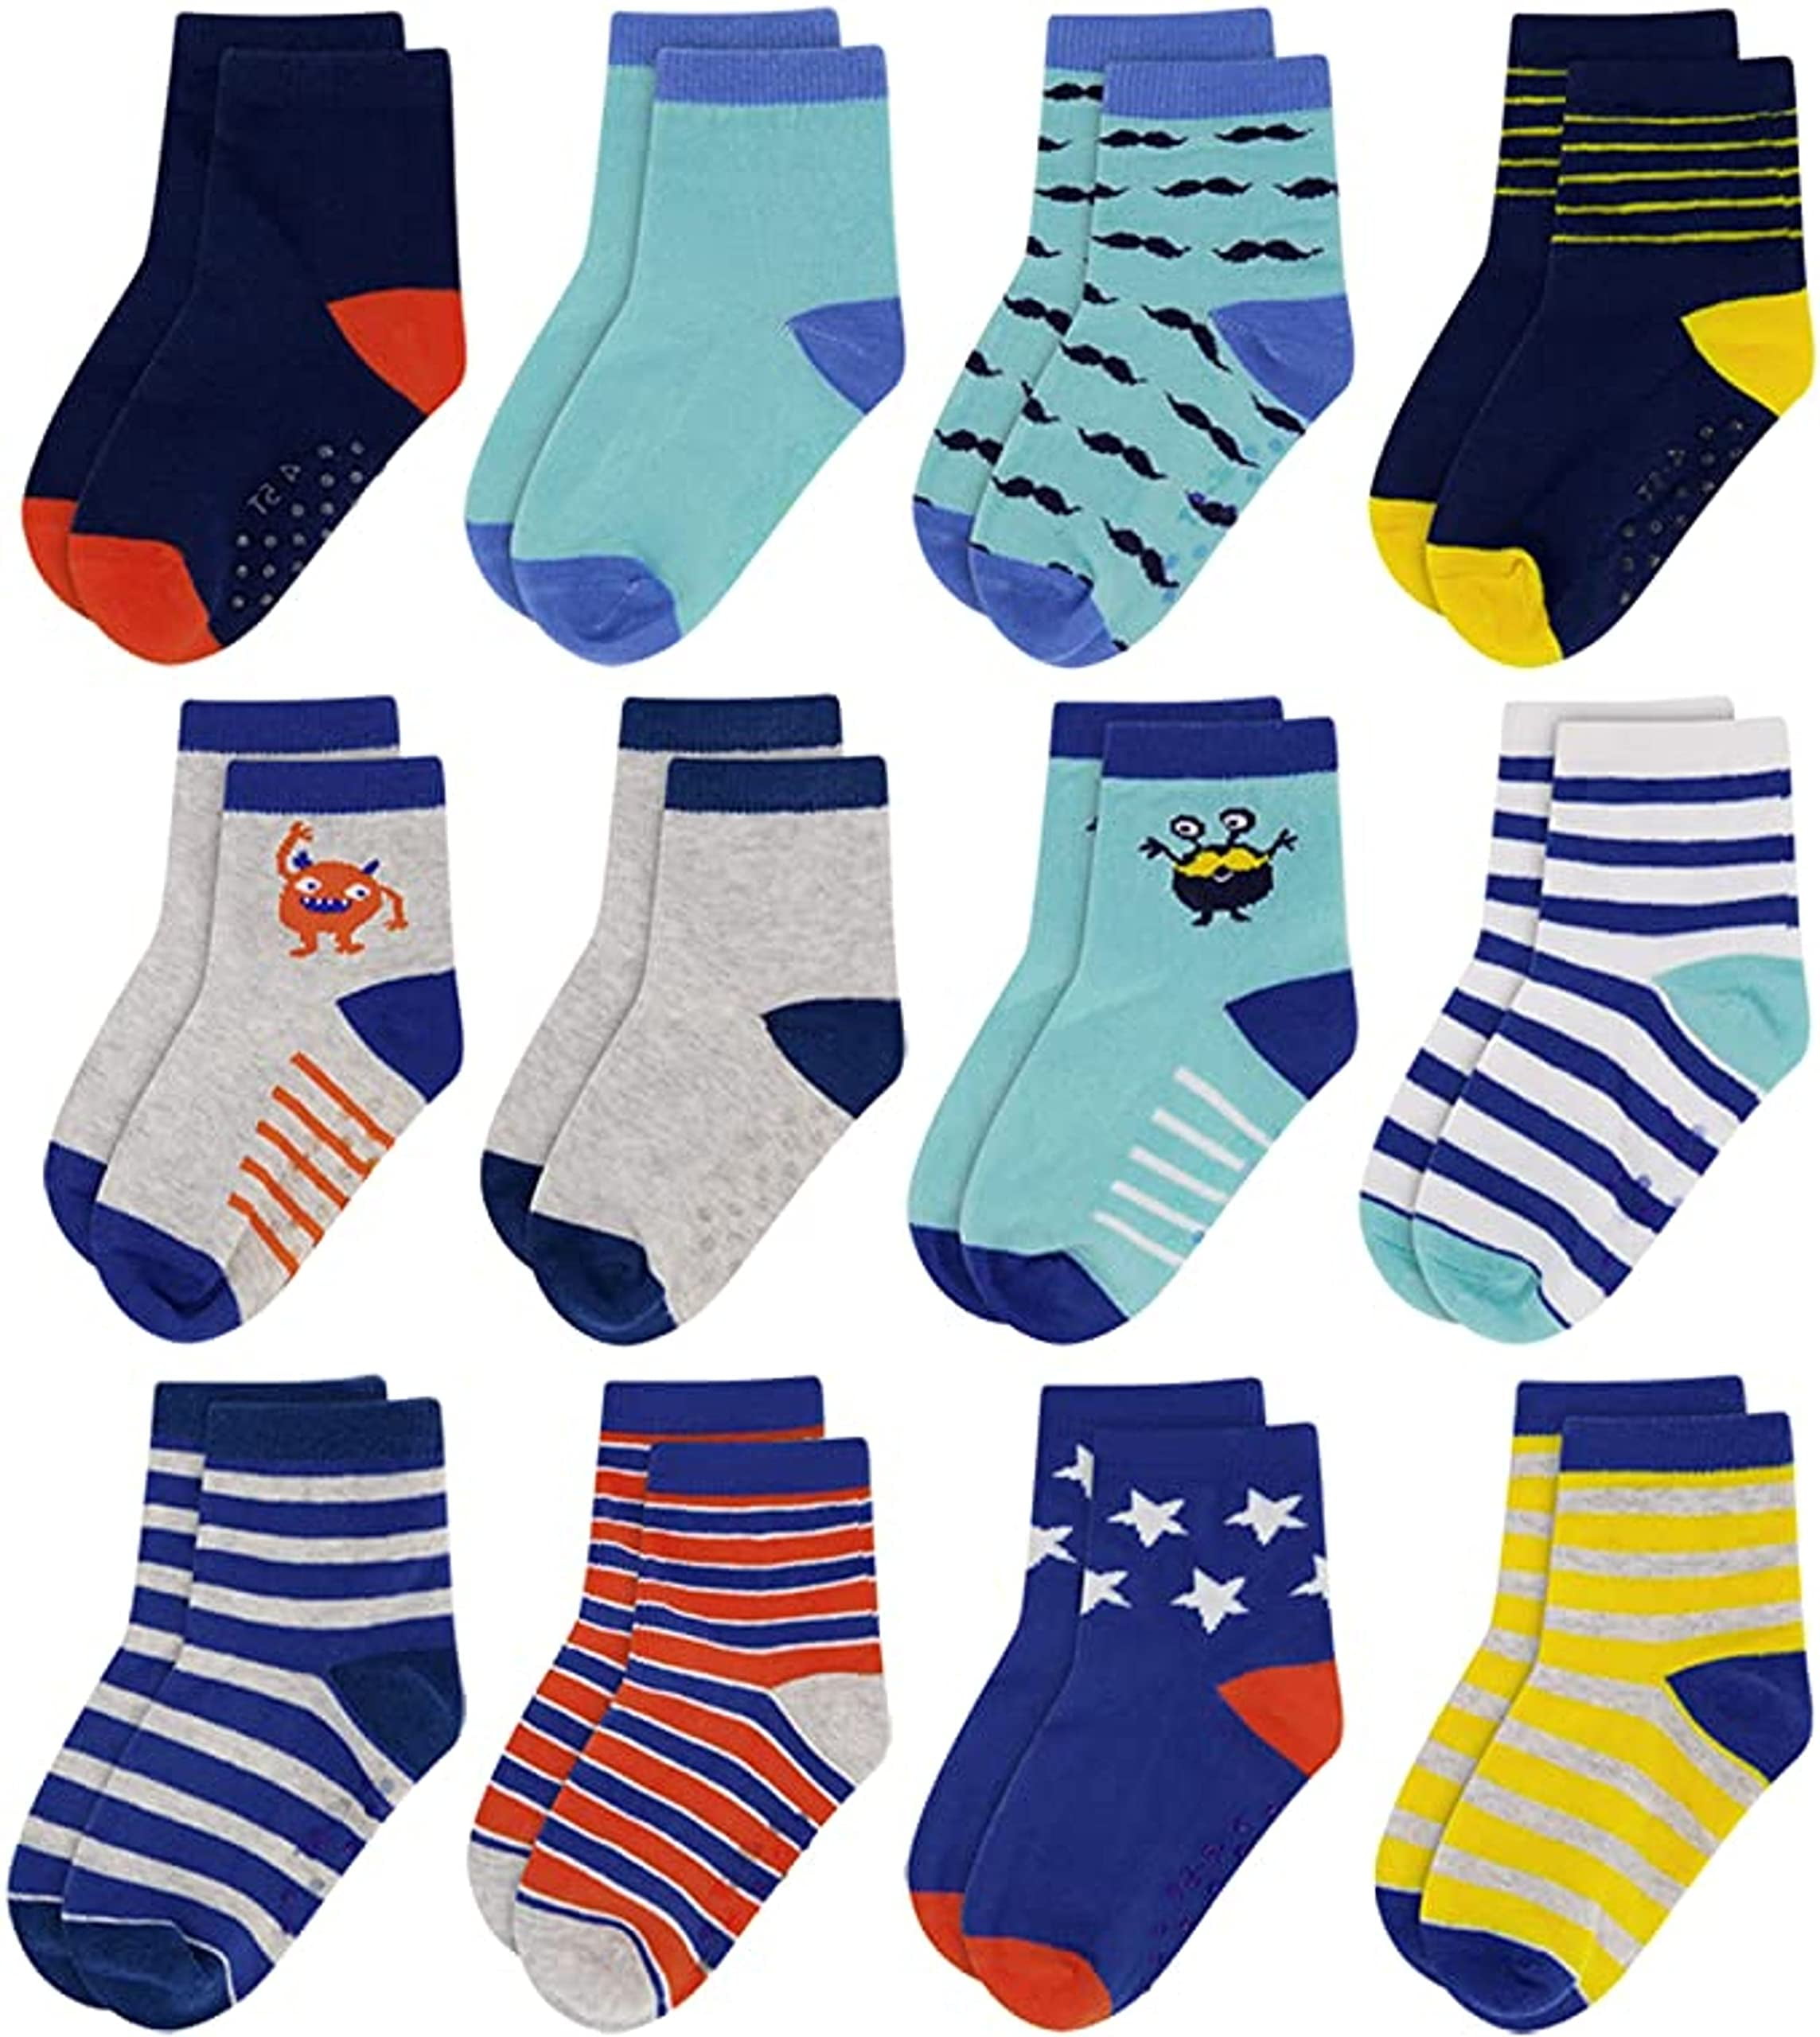 Rising Star Unisex Crew Kids Socks for Toddlers (12 Pack) - Multicolor ...